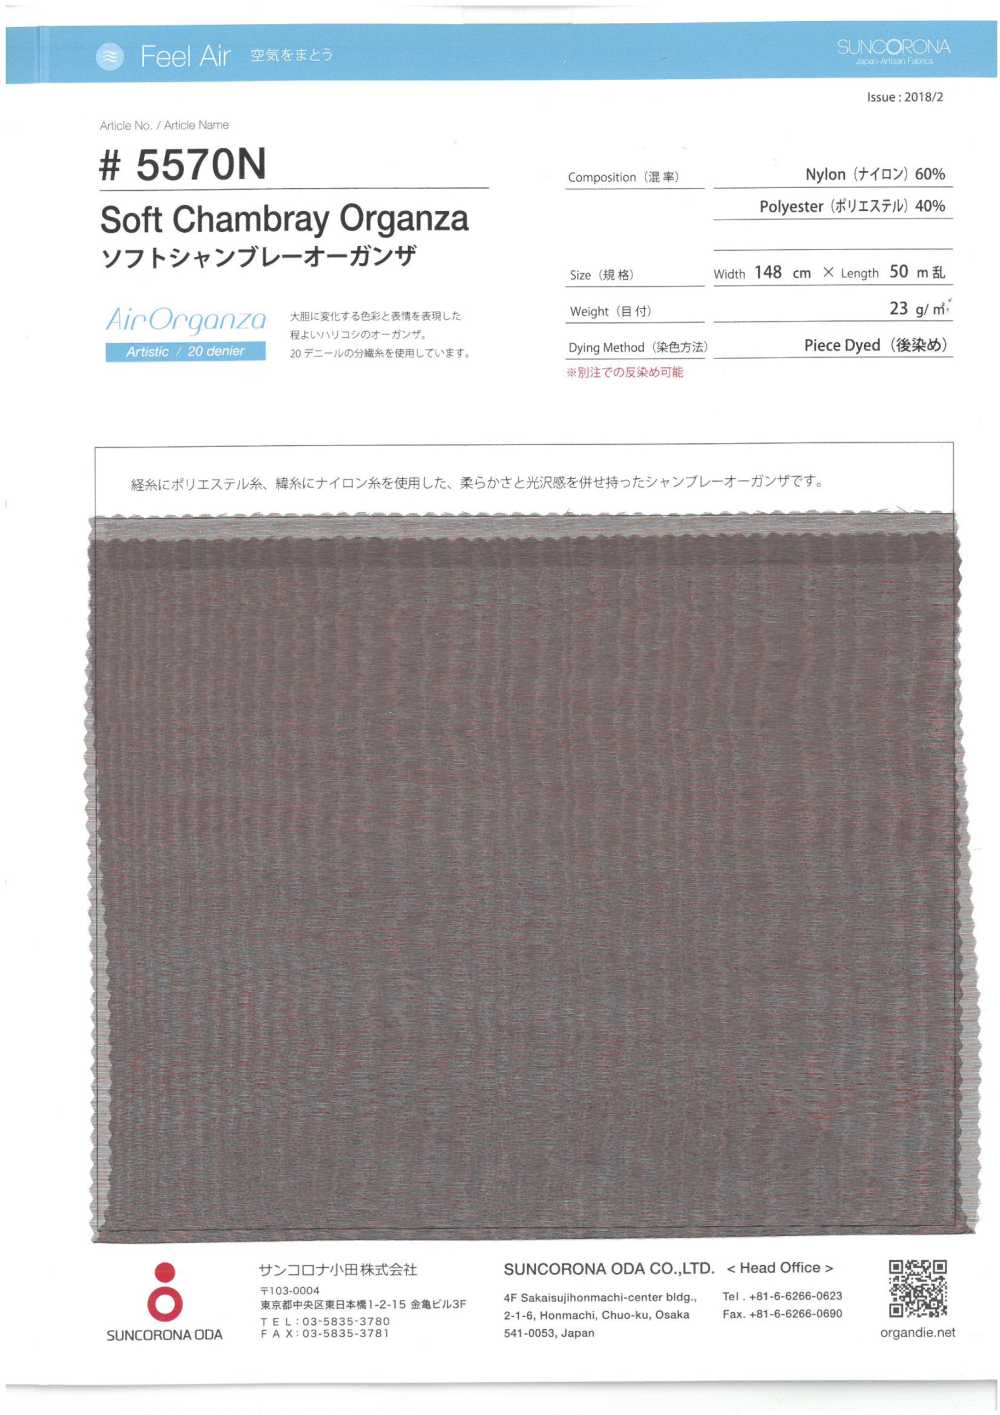 5570N Soft Chambray Organza[Textile / Fabric] Suncorona Oda